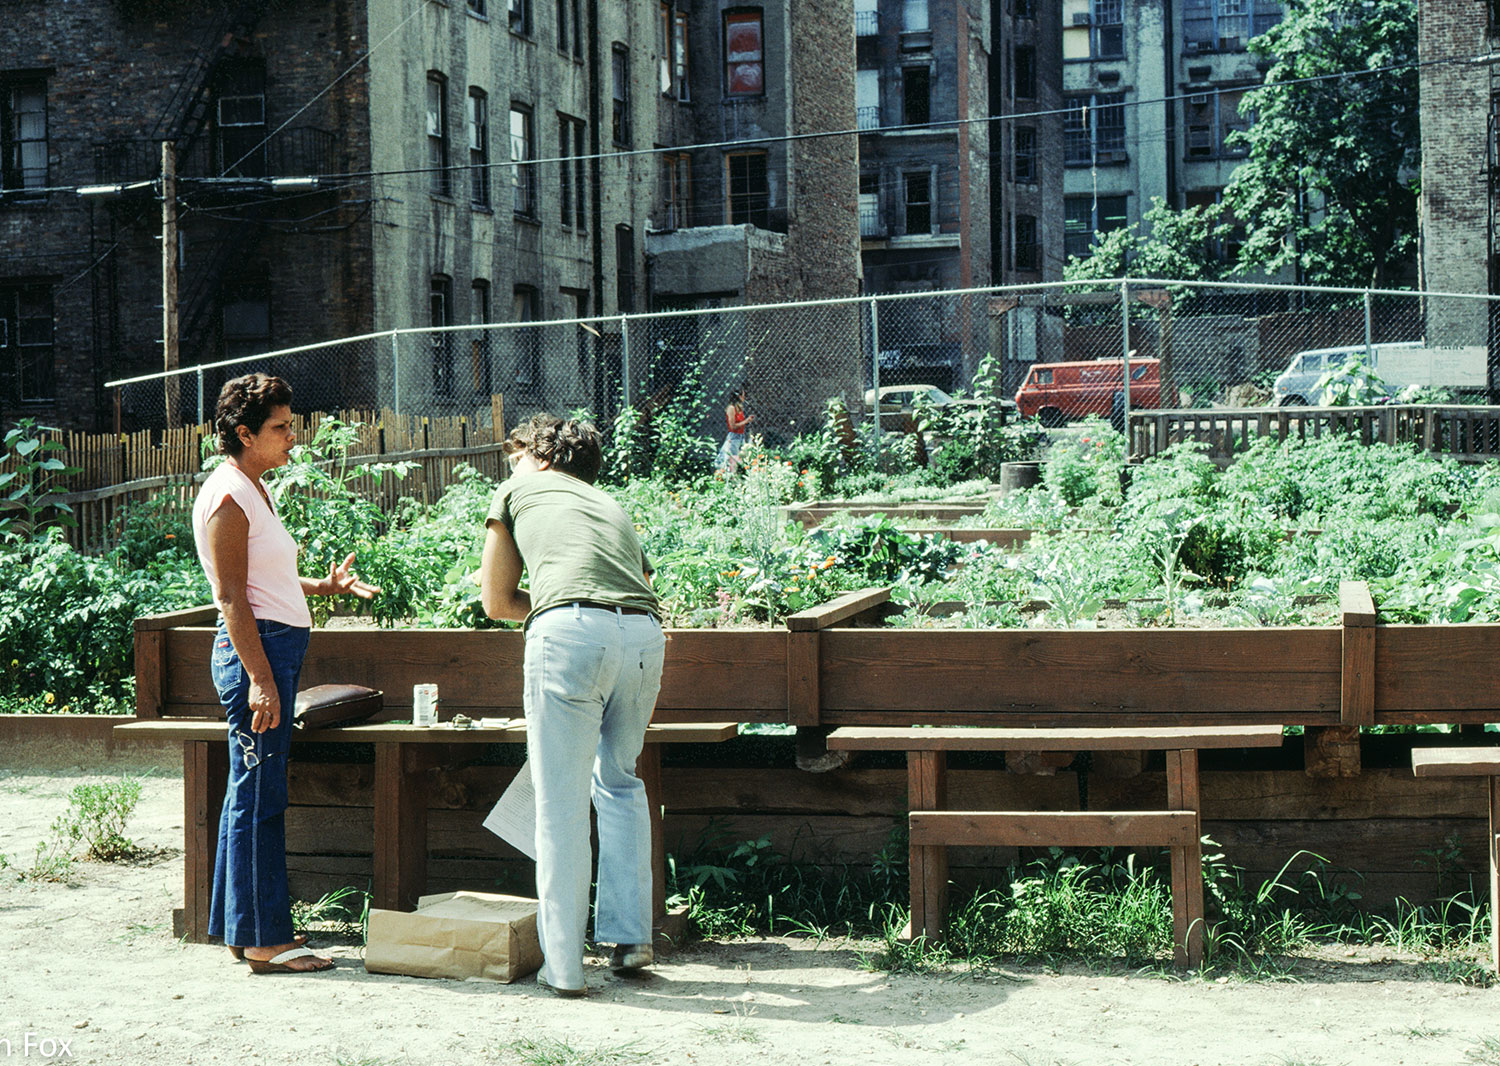 Community garden survey in 1984